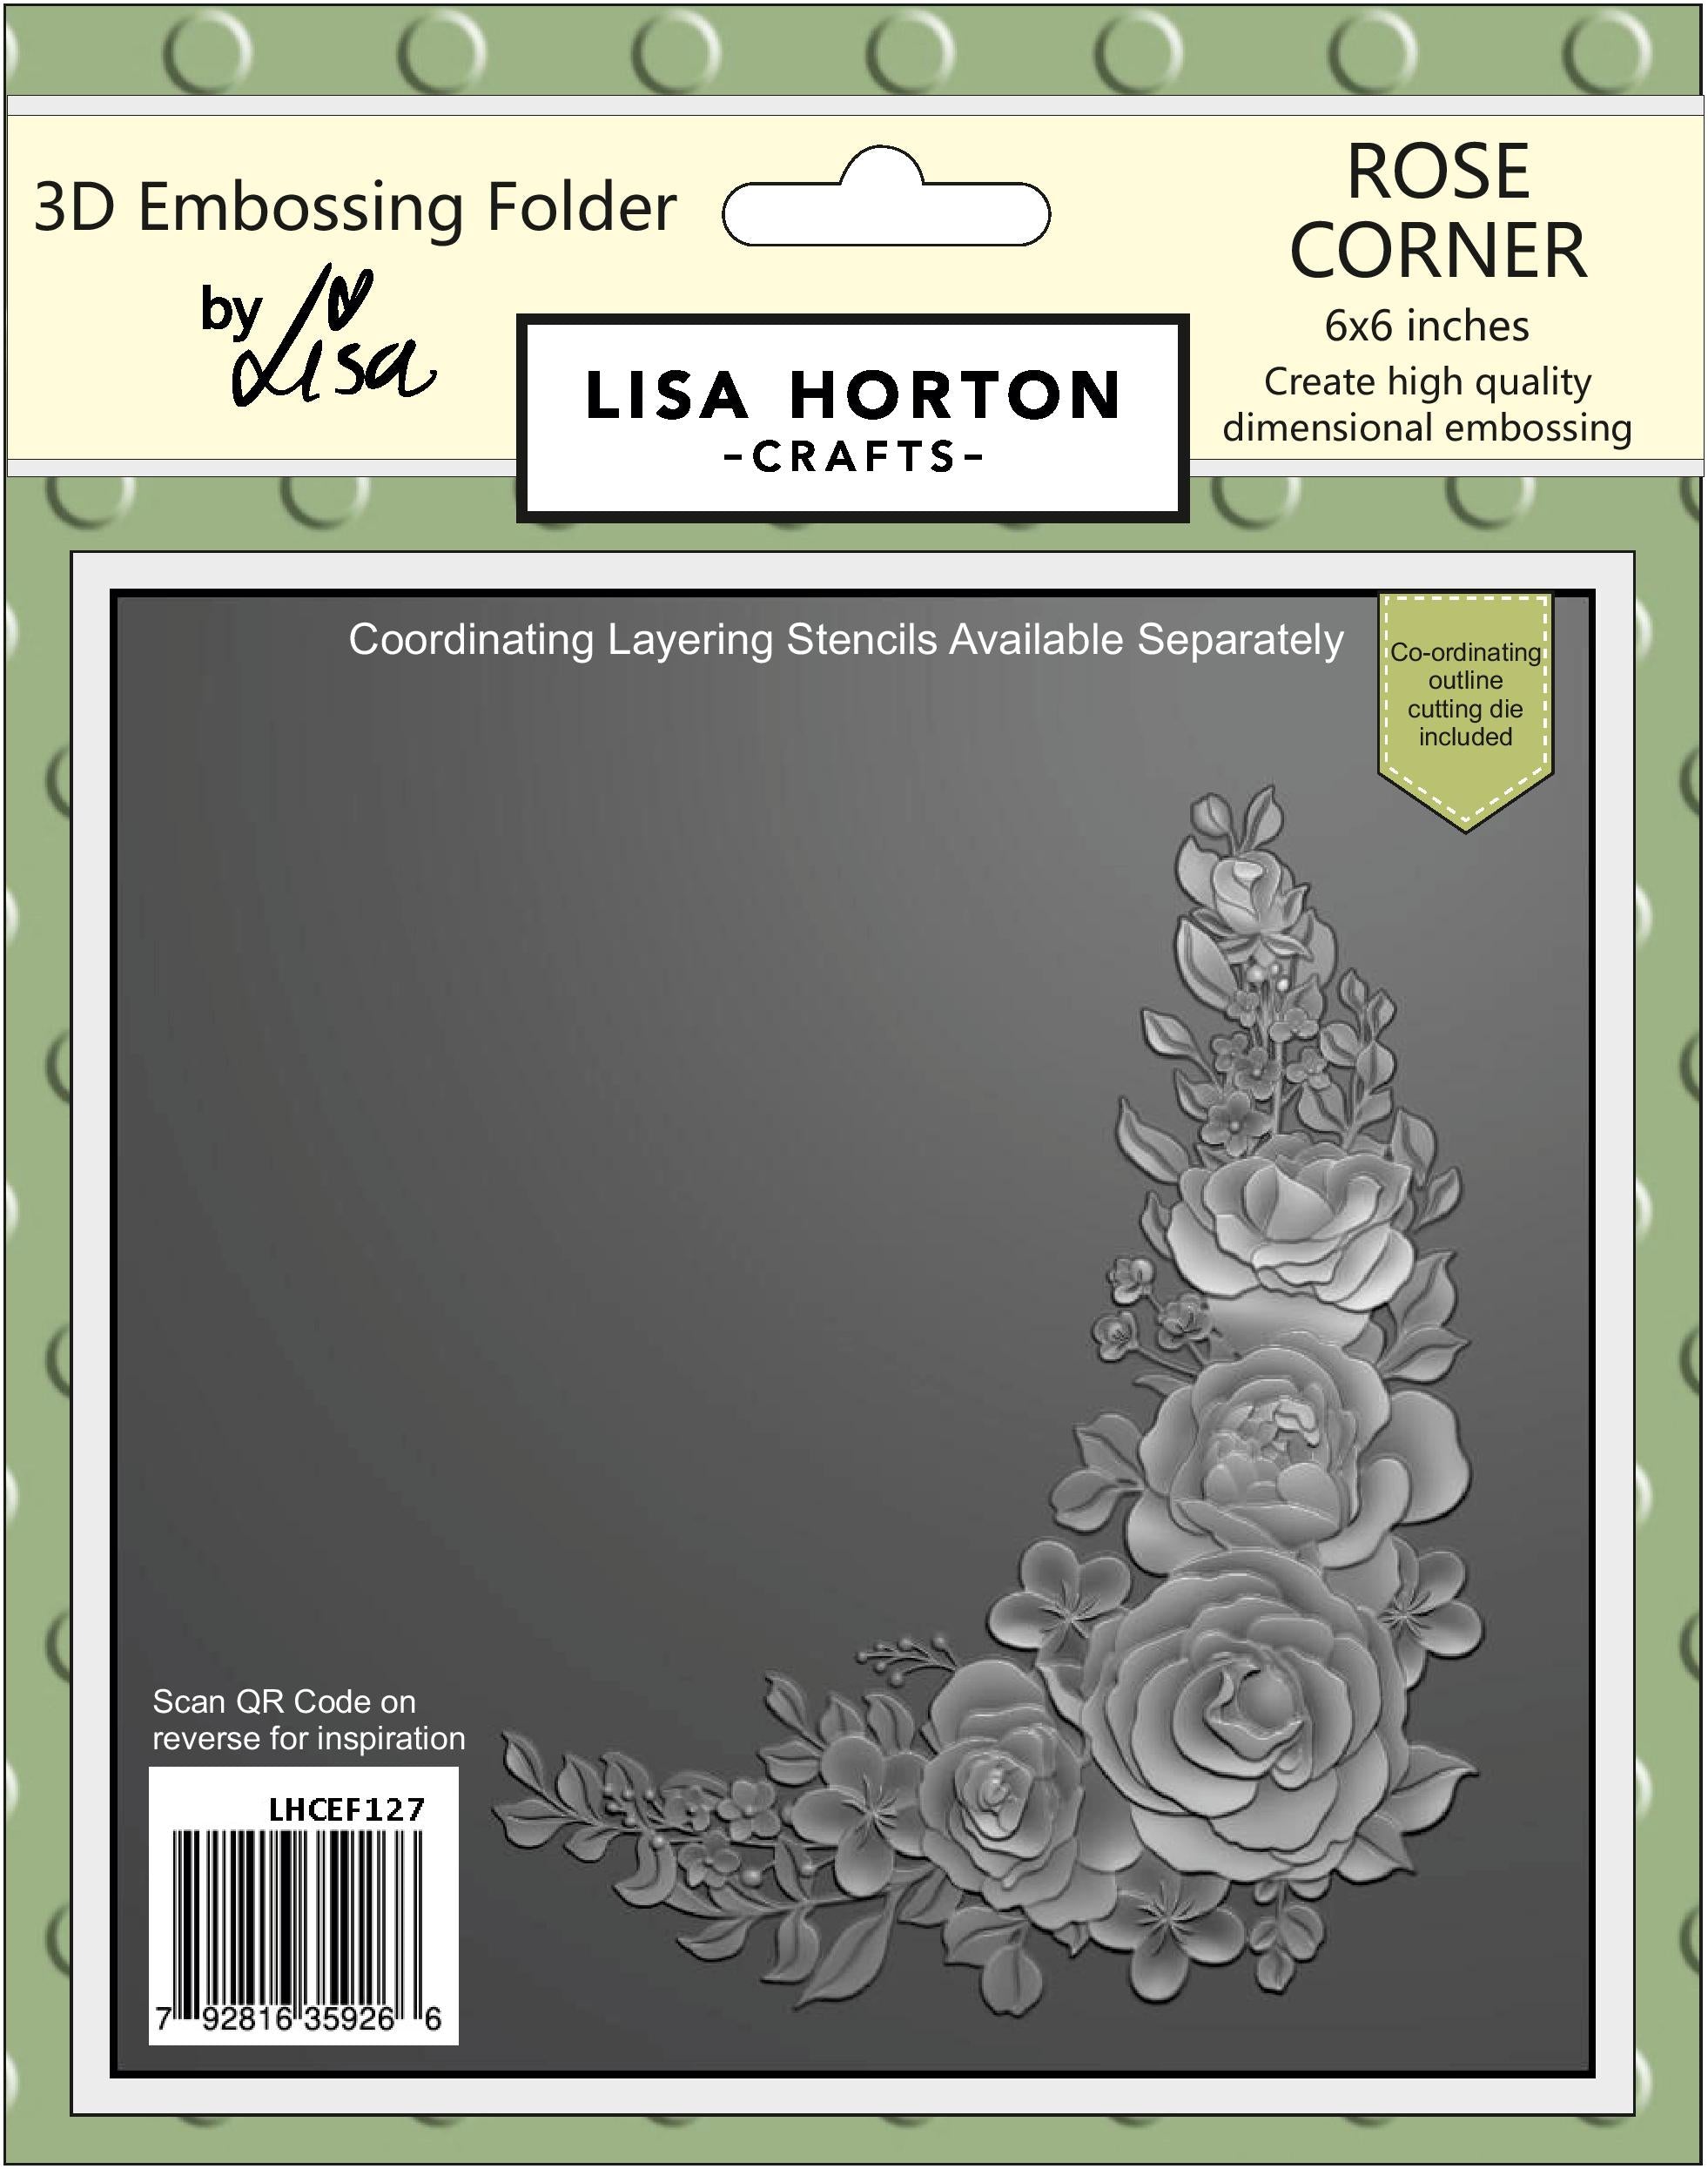 Lisa Horton Crafts Rose Corner 6x6 3D Embossing Folder & Die